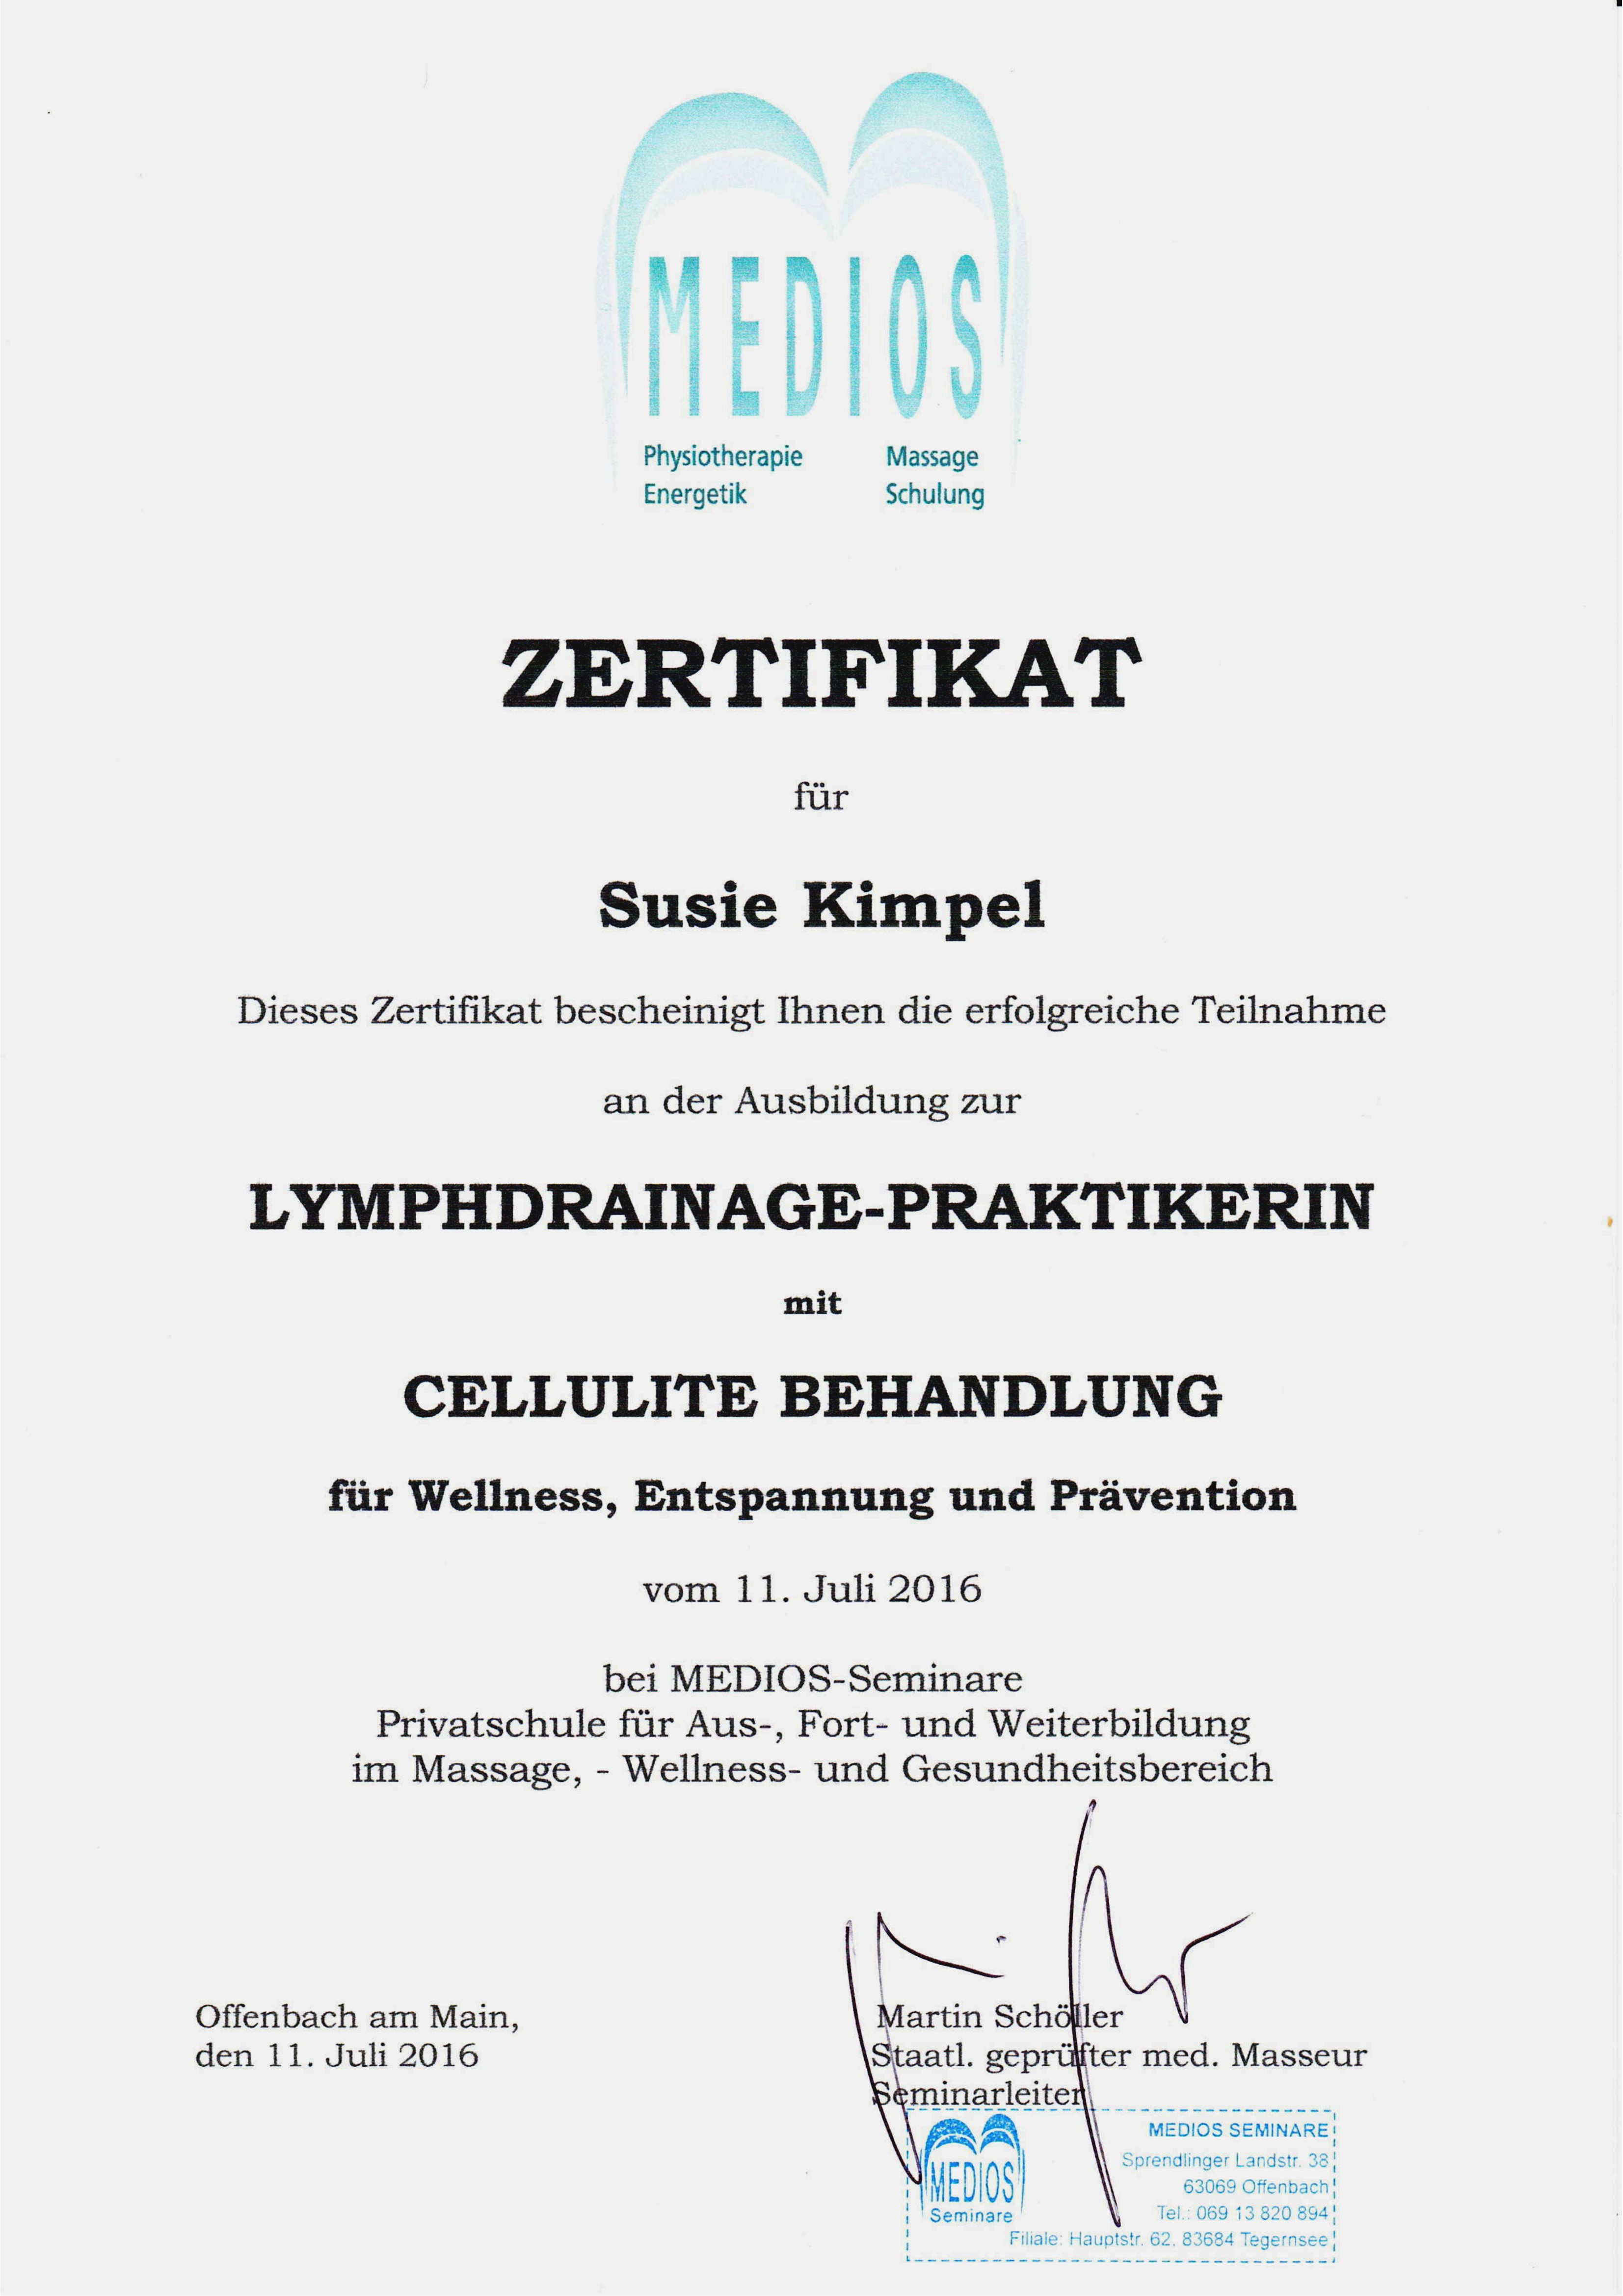 Lymphdrainage-Praktikerin
Cellulite-Behandlung 11.07.2016